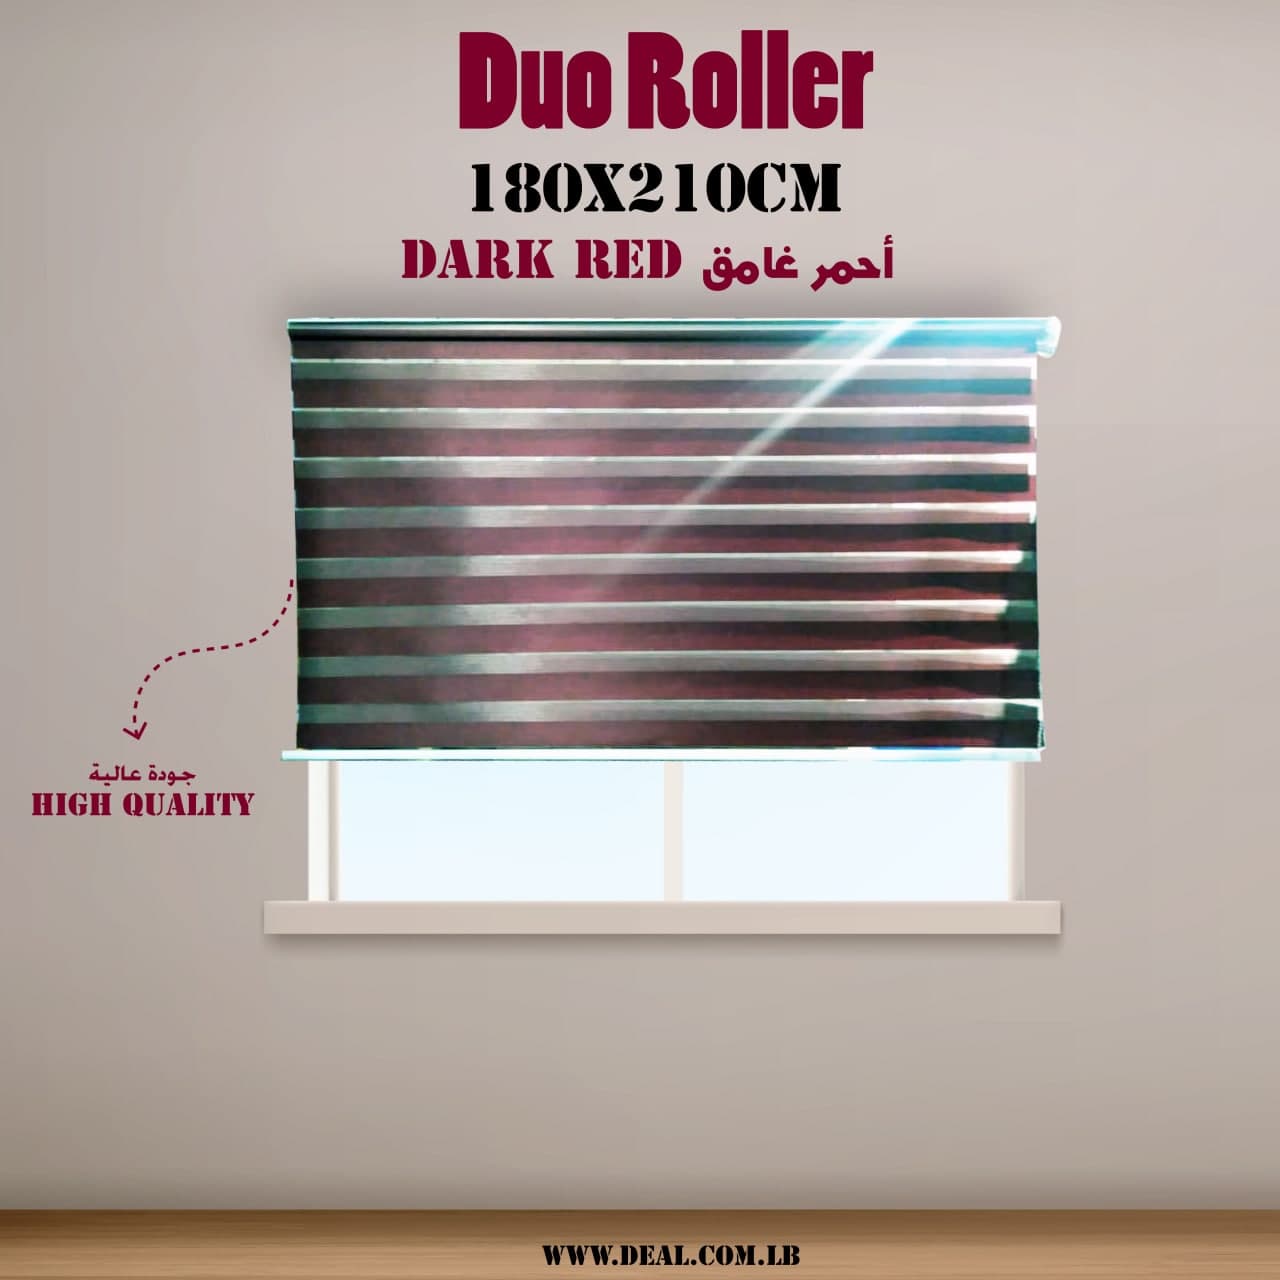 Dark+Red+Duo+Roller+Curtain+180x210cm